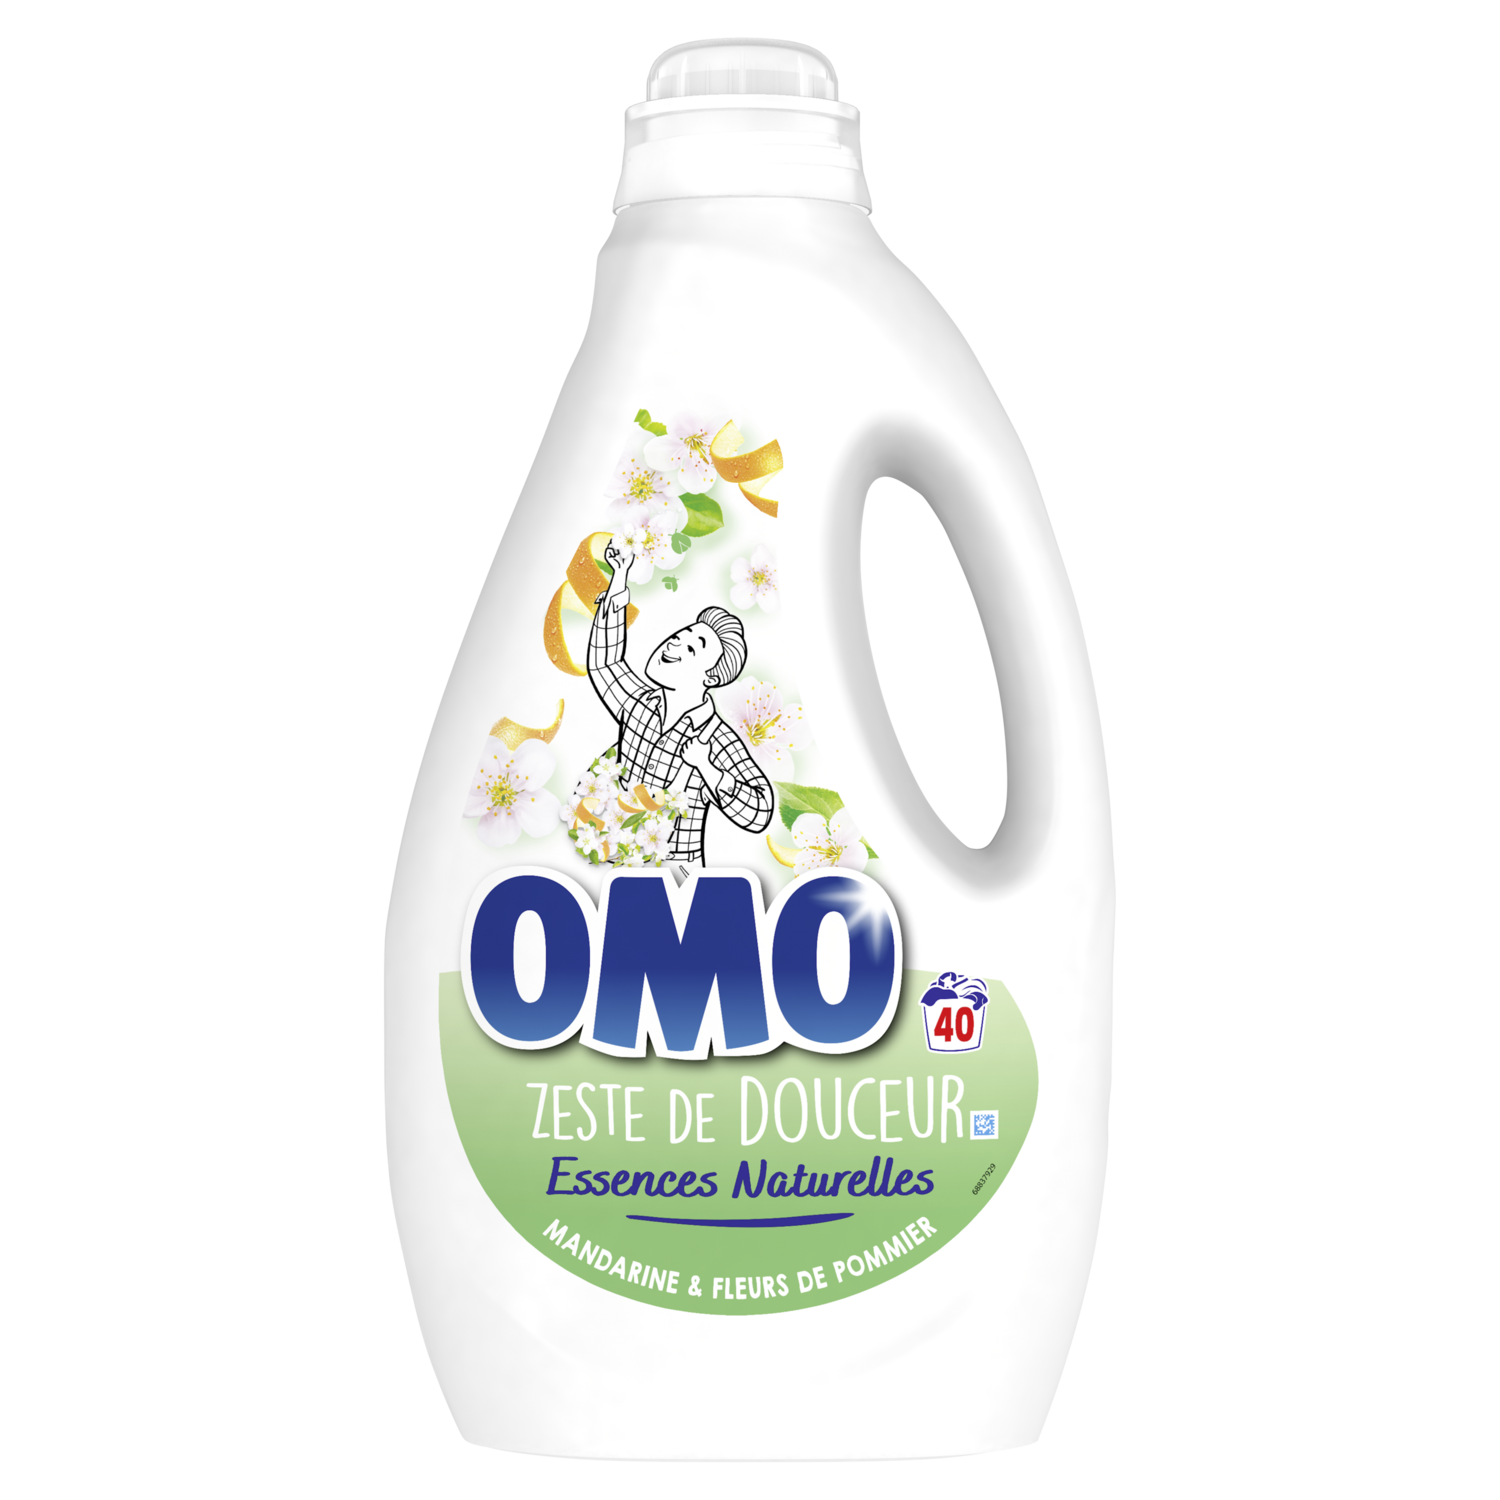 Profital - Lessive liquide Omo Color, 3 x 40 lessives, 3 x 2 litres CHF  24,95 chez Denner